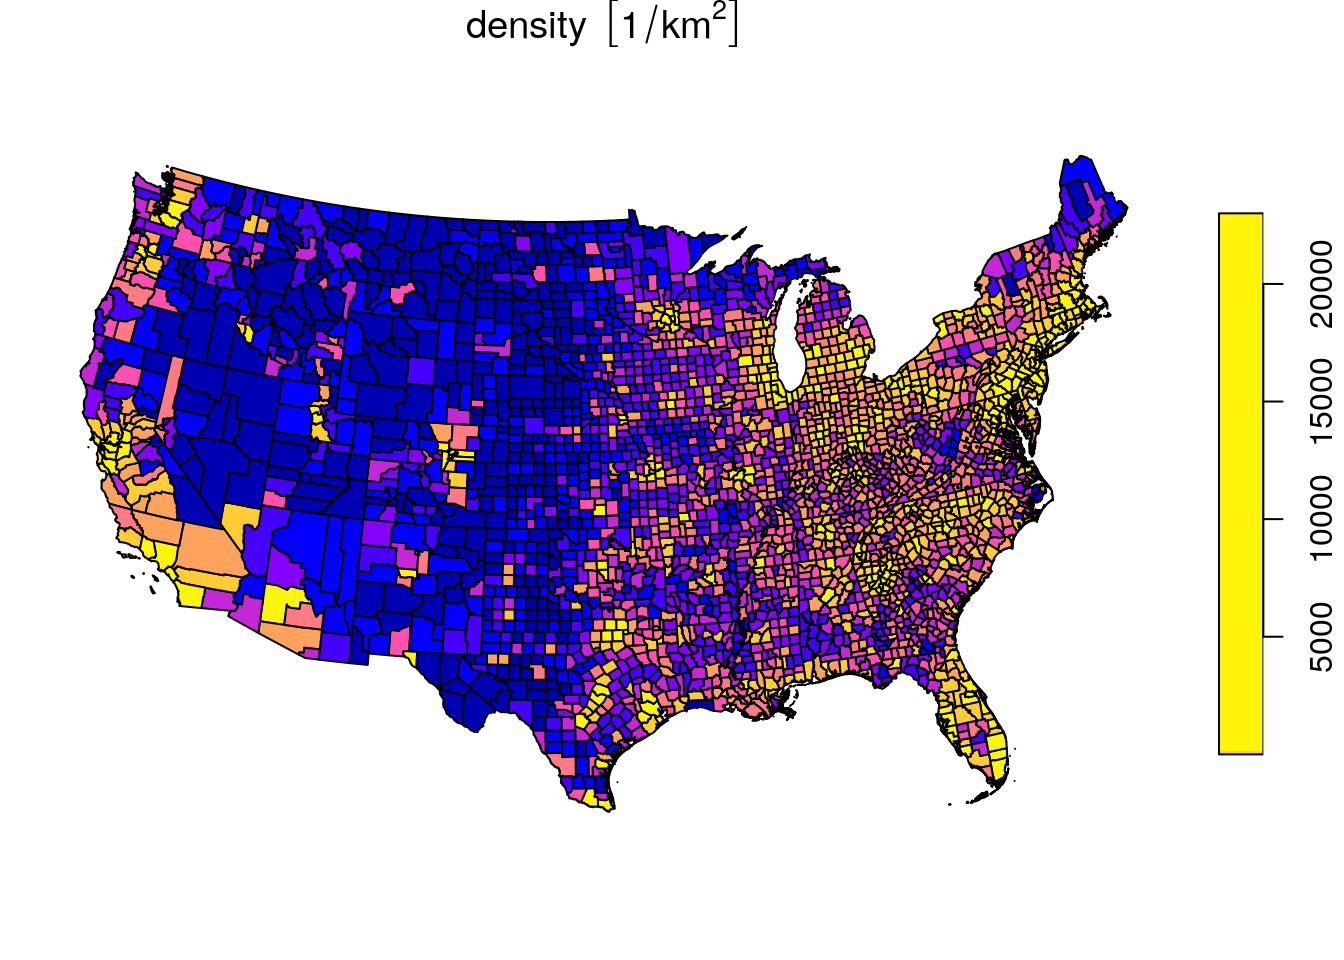 Population density in the US, quantile breaks